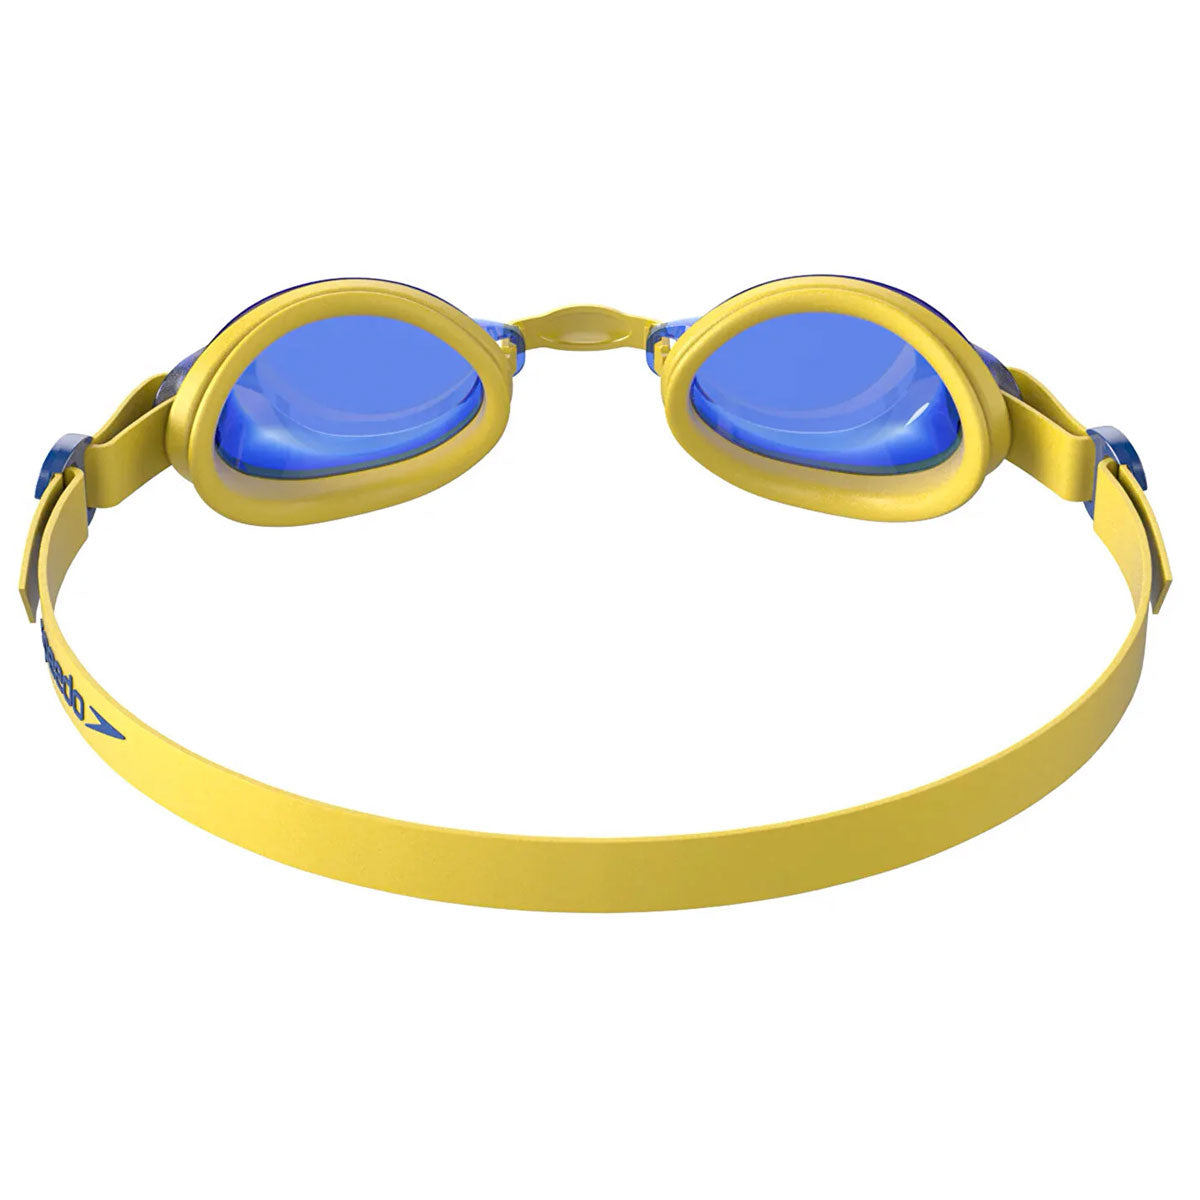 Speedo Jet V2 Goggles - Youth - Empire Yellow/Neon Blue